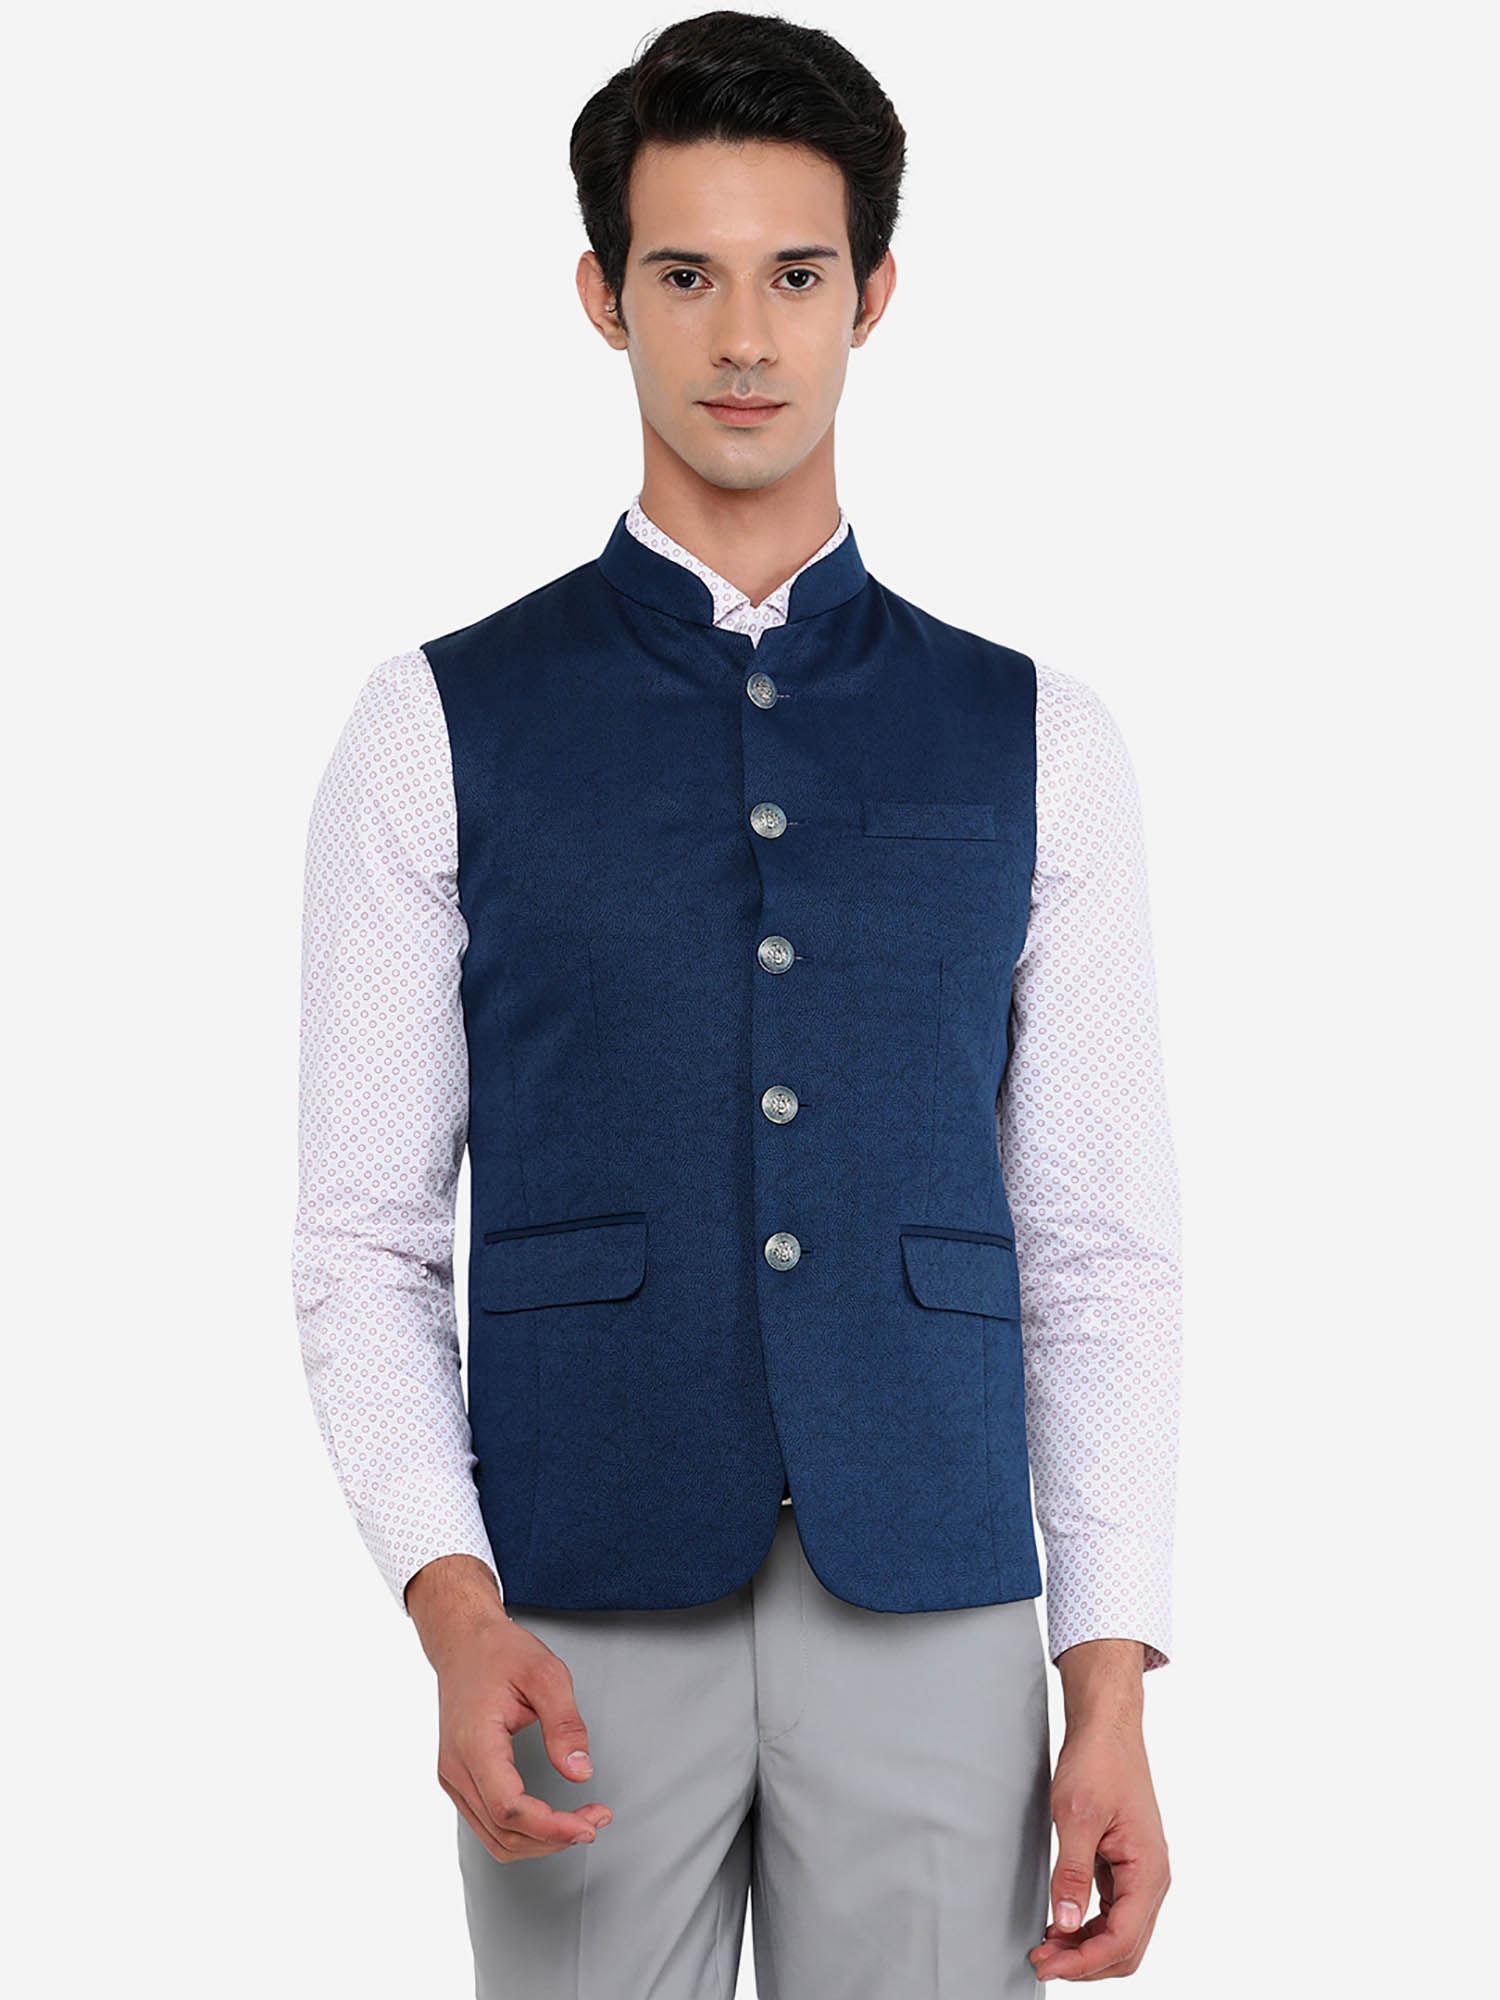 mens blue terry wool solid regular fit waist coat (bandhgala jacket)